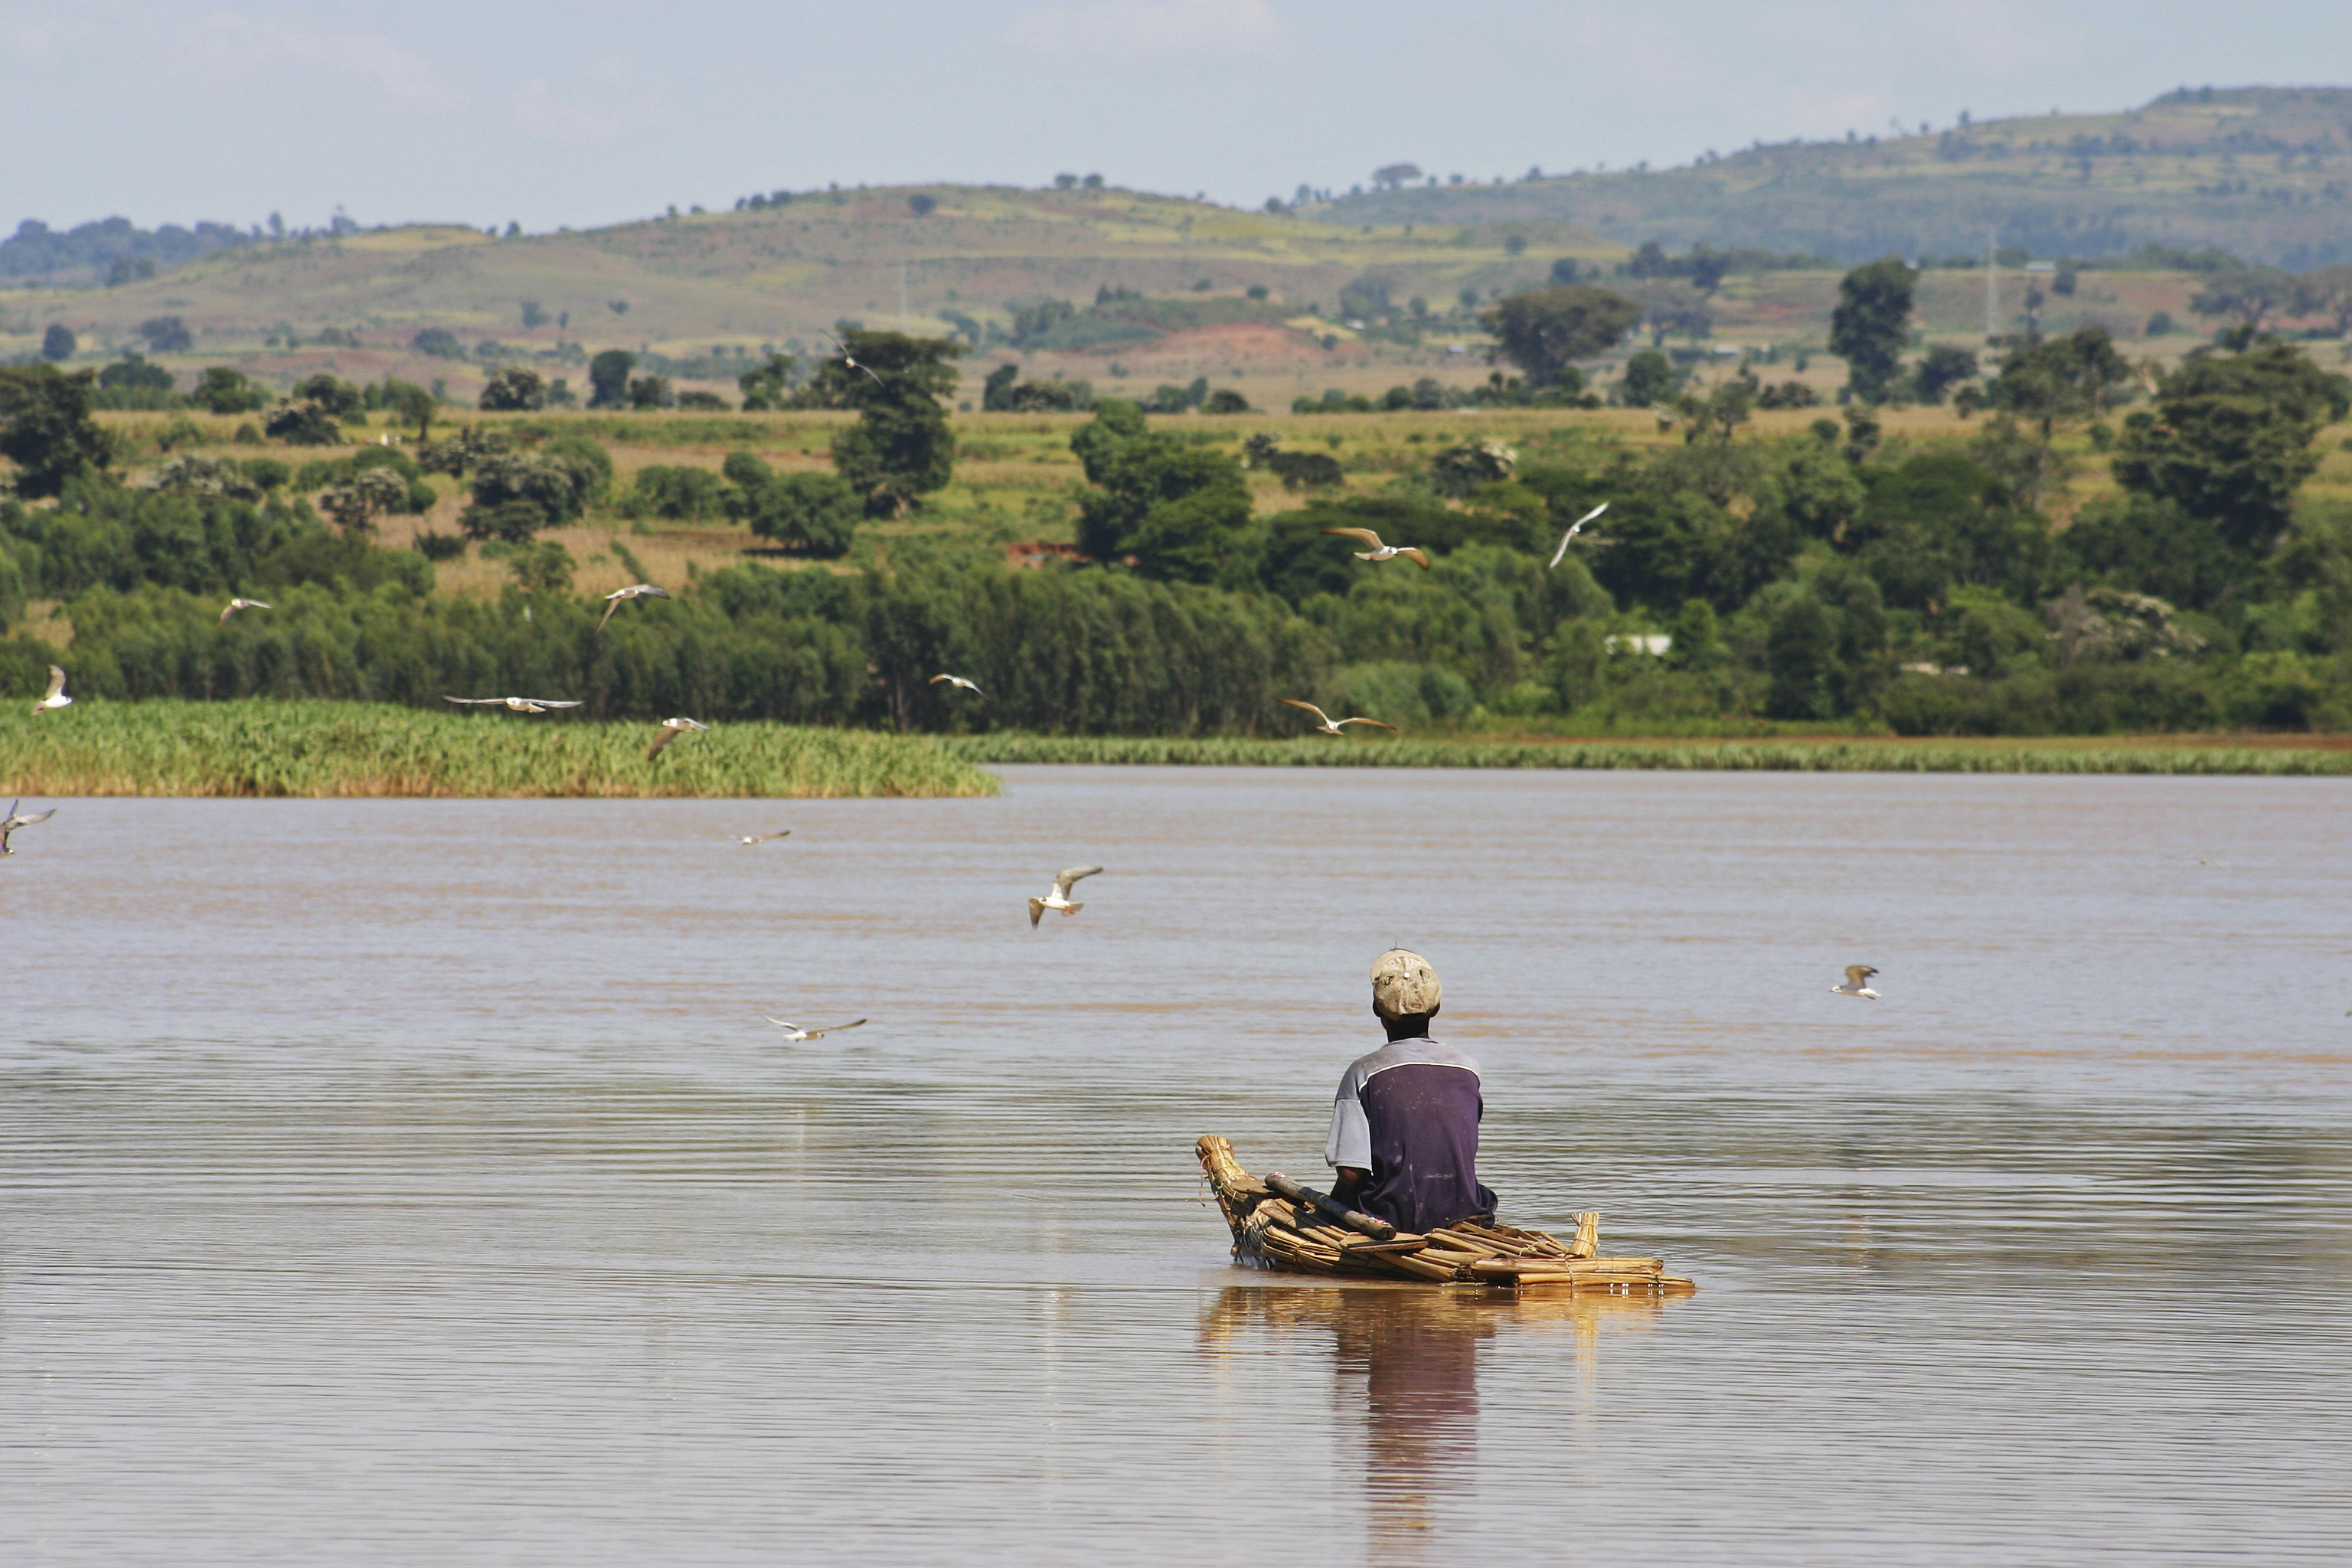 Fisherman on Lake Tana, Ethiopia